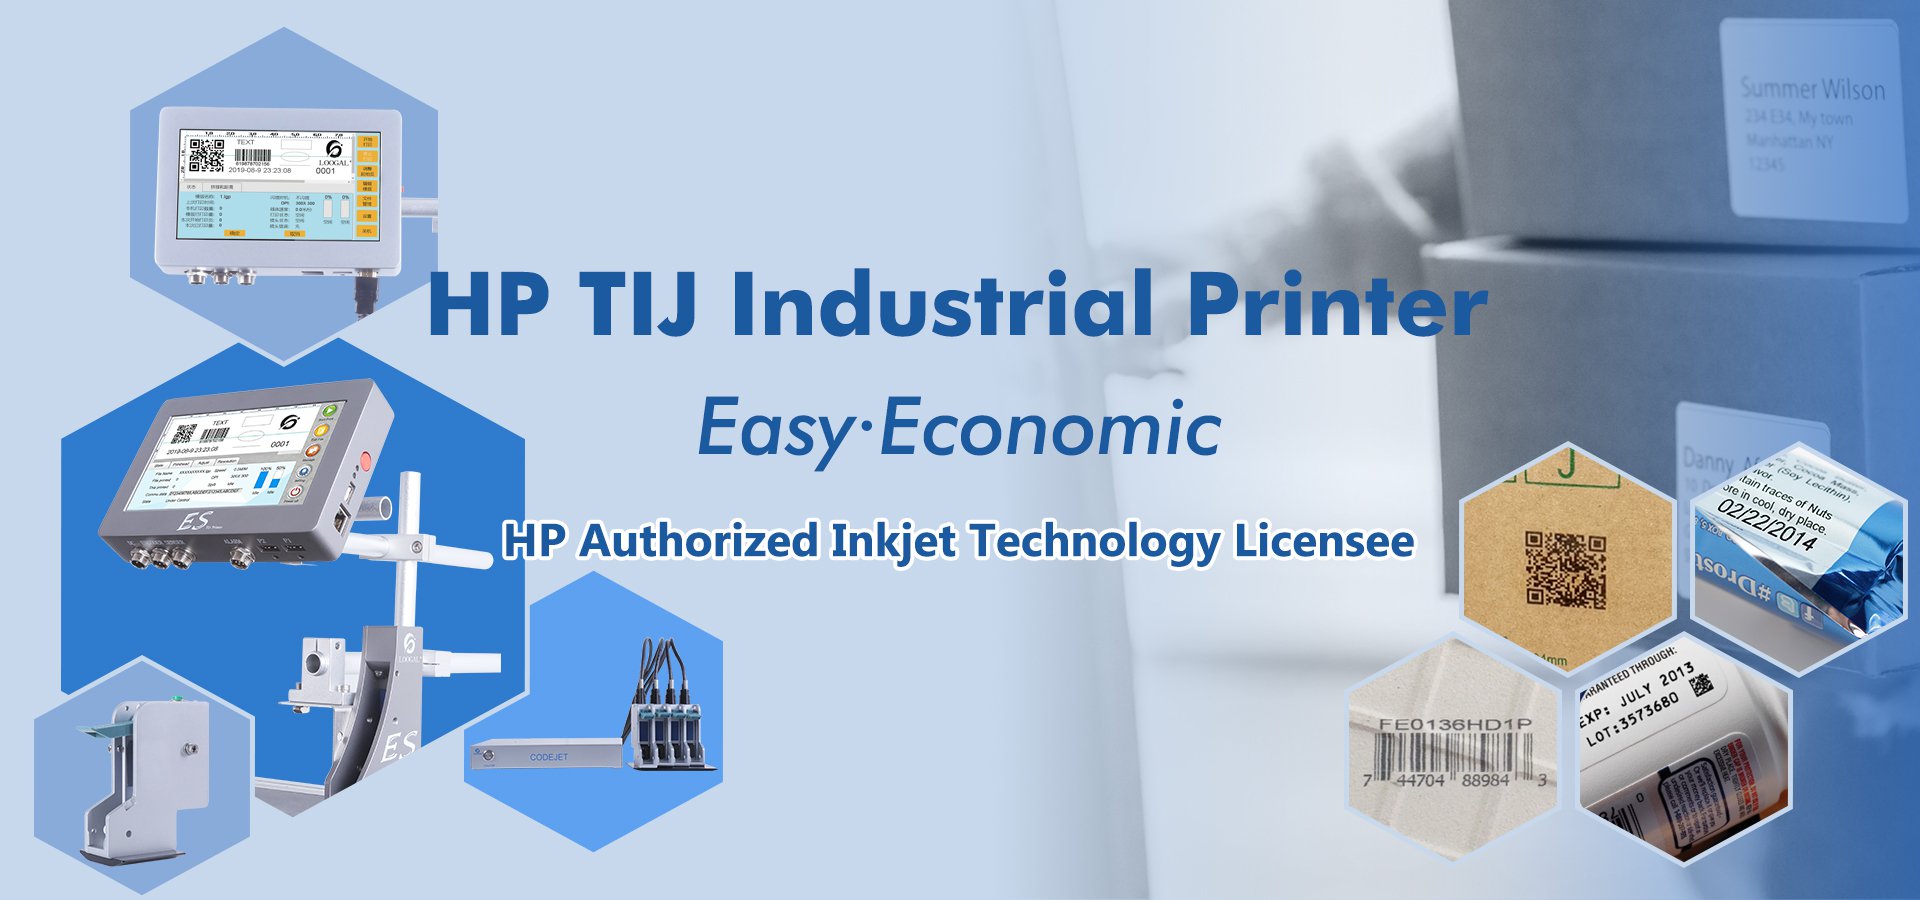 HP TIJ Industrial Printer